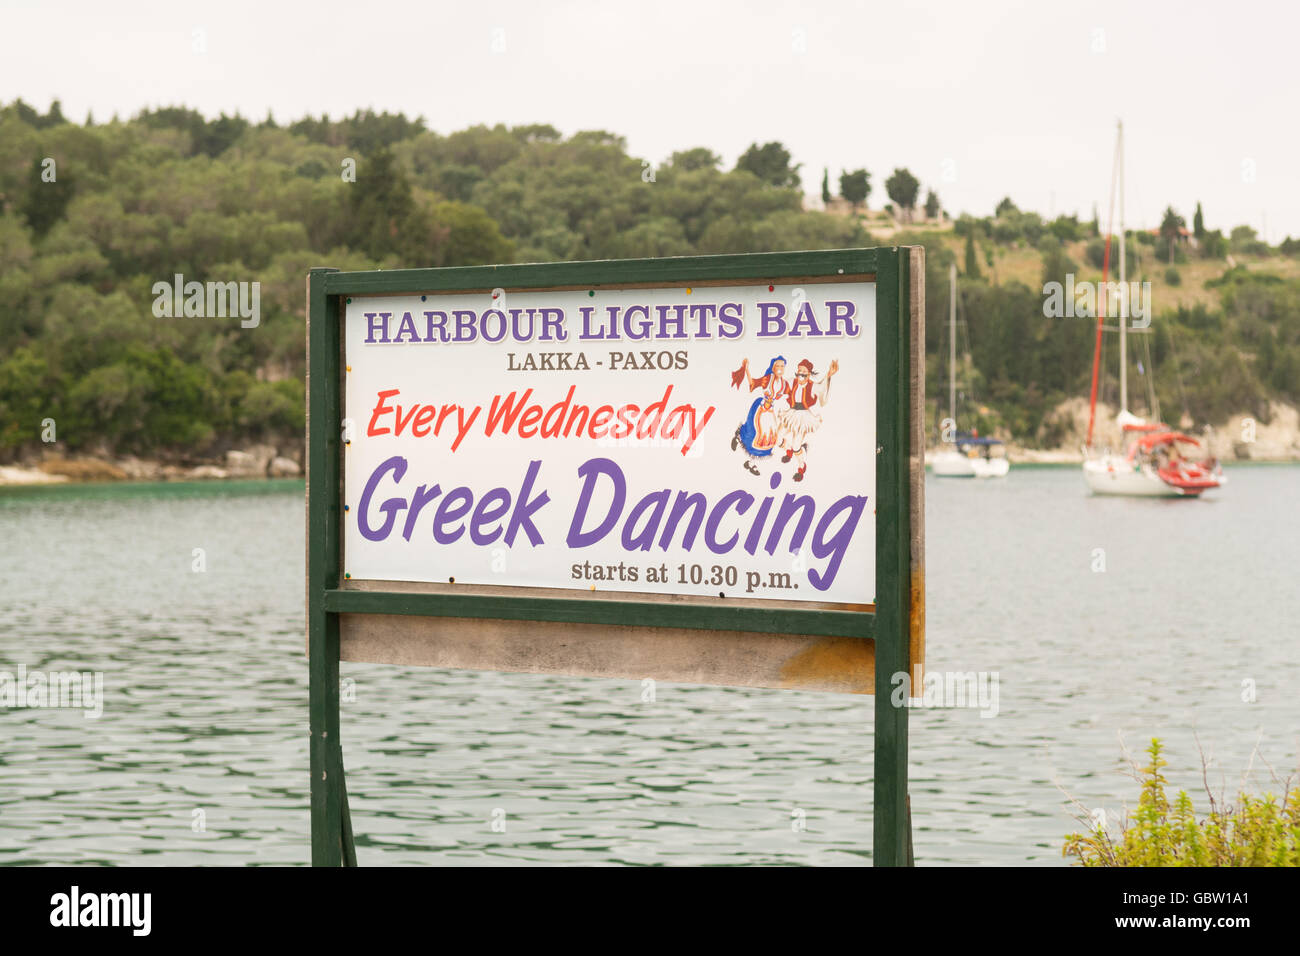 Greek Dancing sign,  Harbour Lights Bar, Lakka, Paxos, Greece Stock Photo